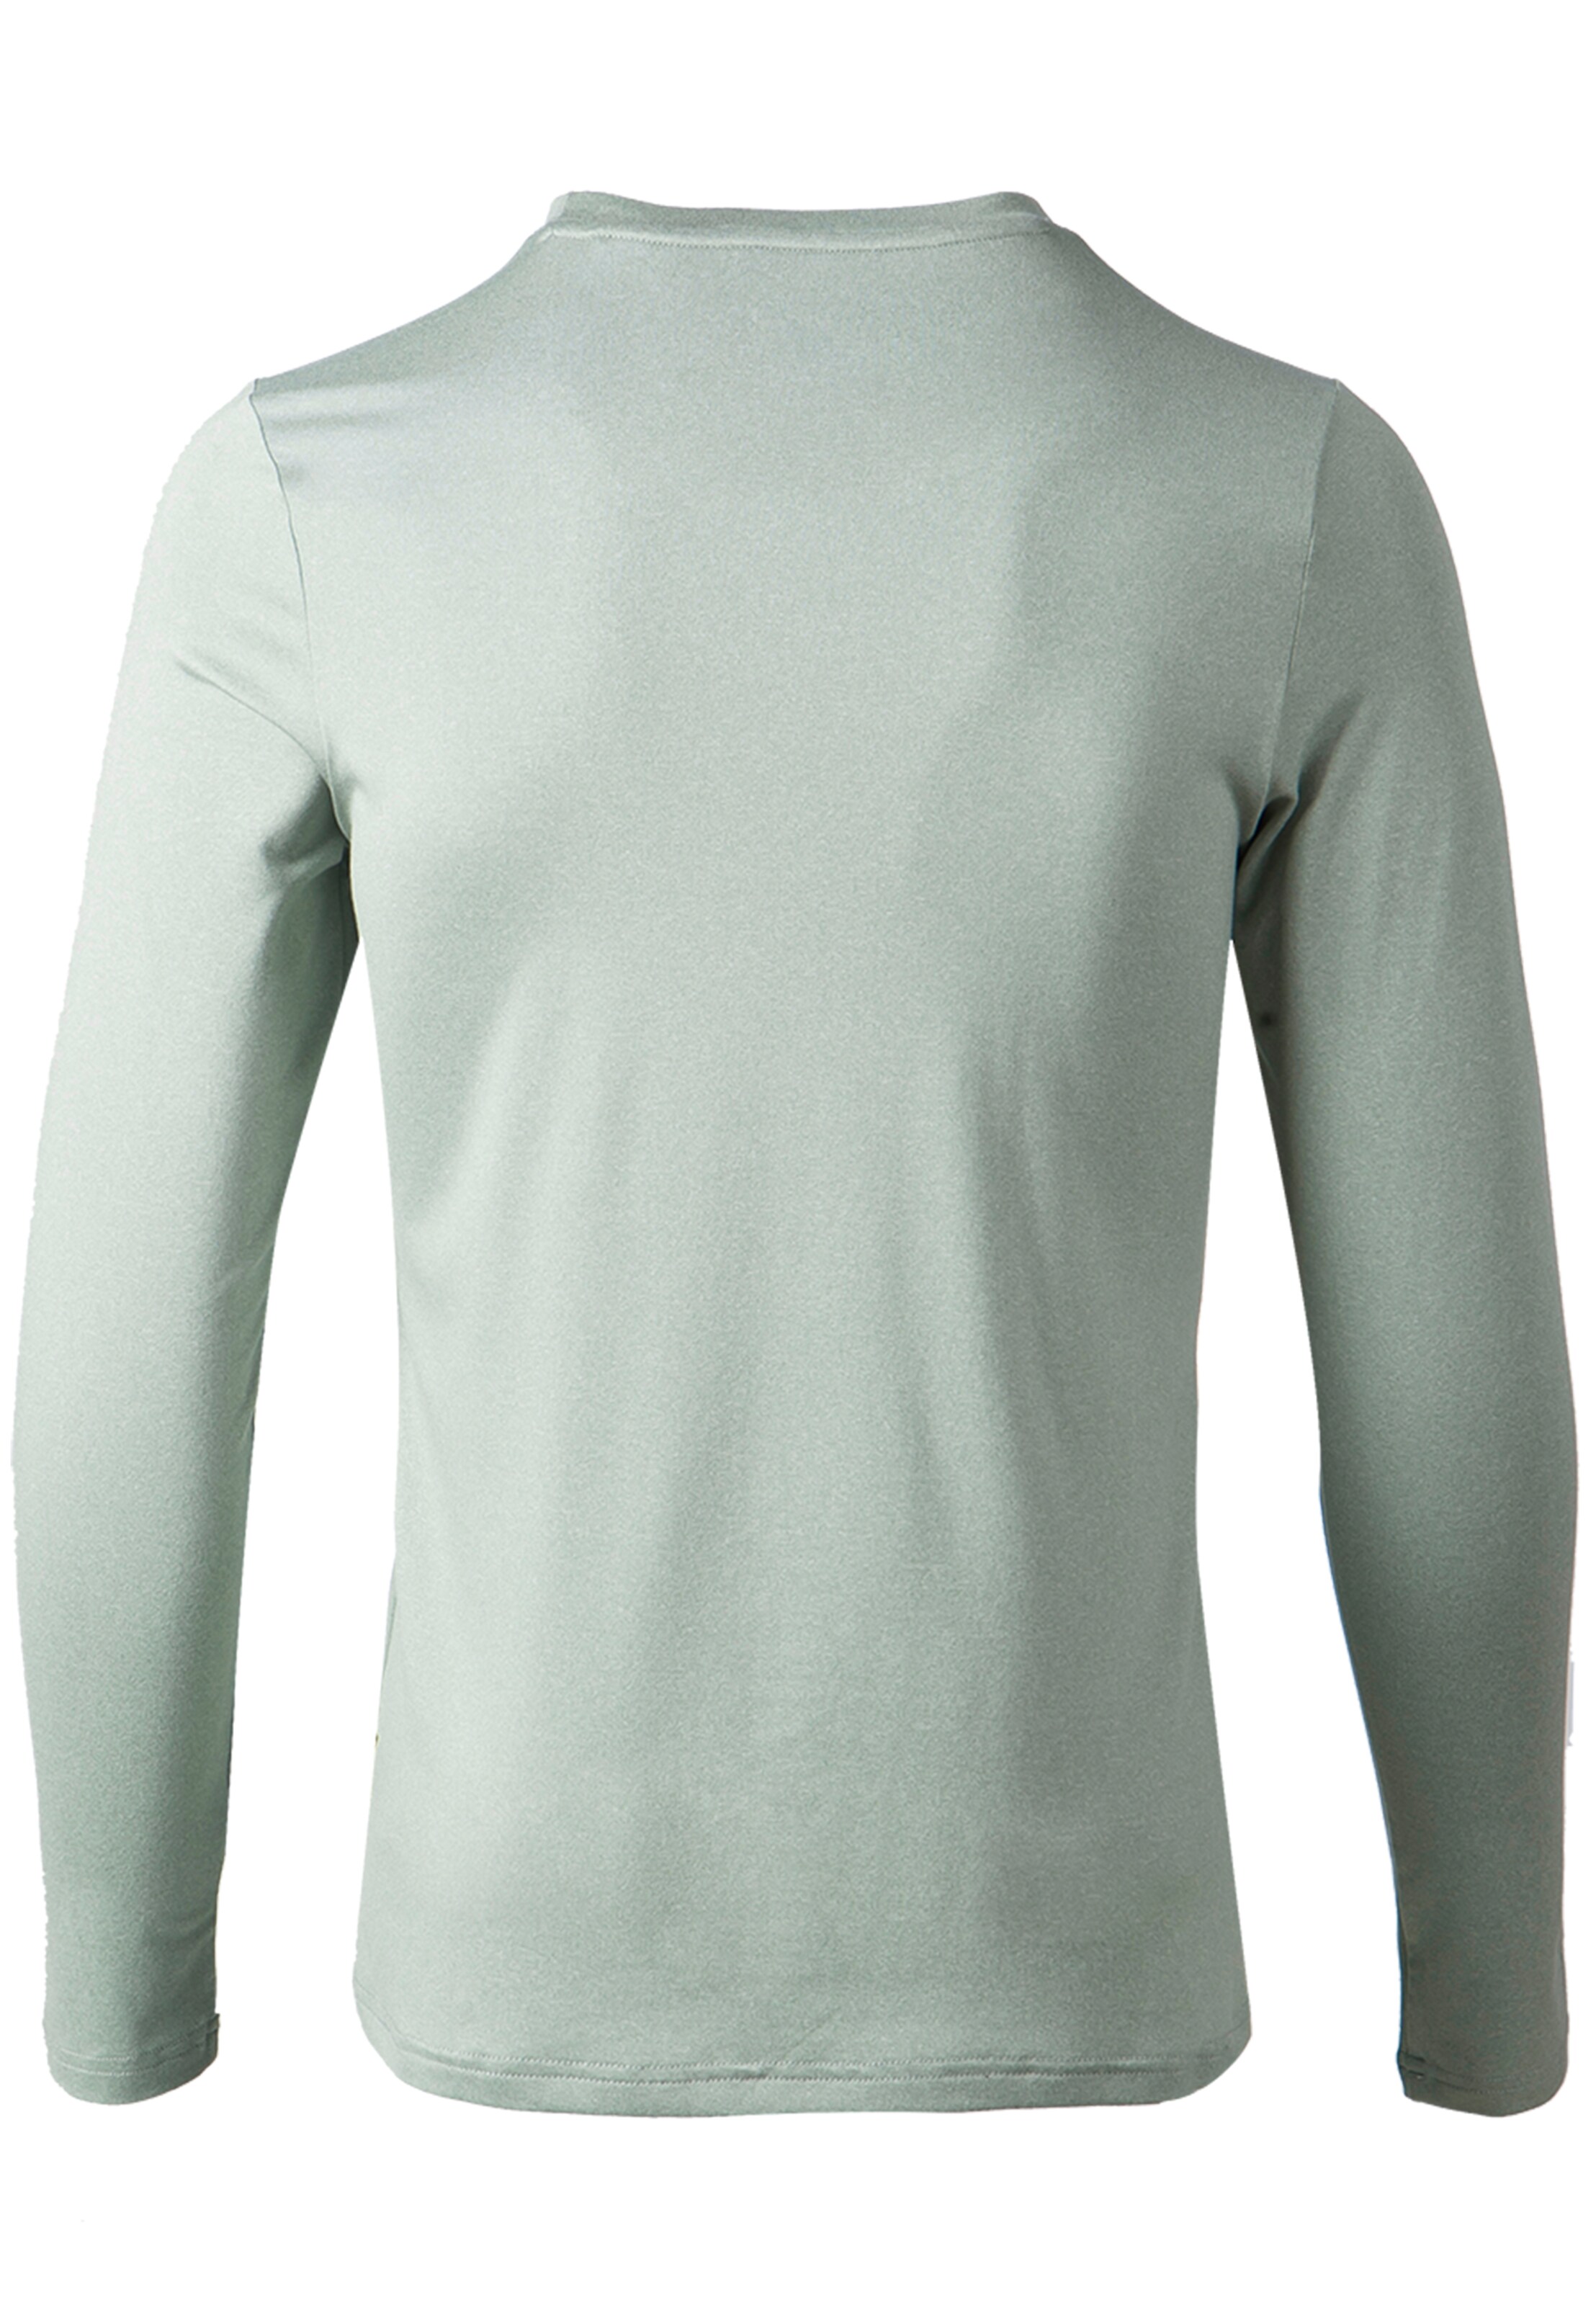 Frauen Shirts & Tops ELITE LAB Shirt 'X1' in Pastellgrün, Hellgrün - SS09114